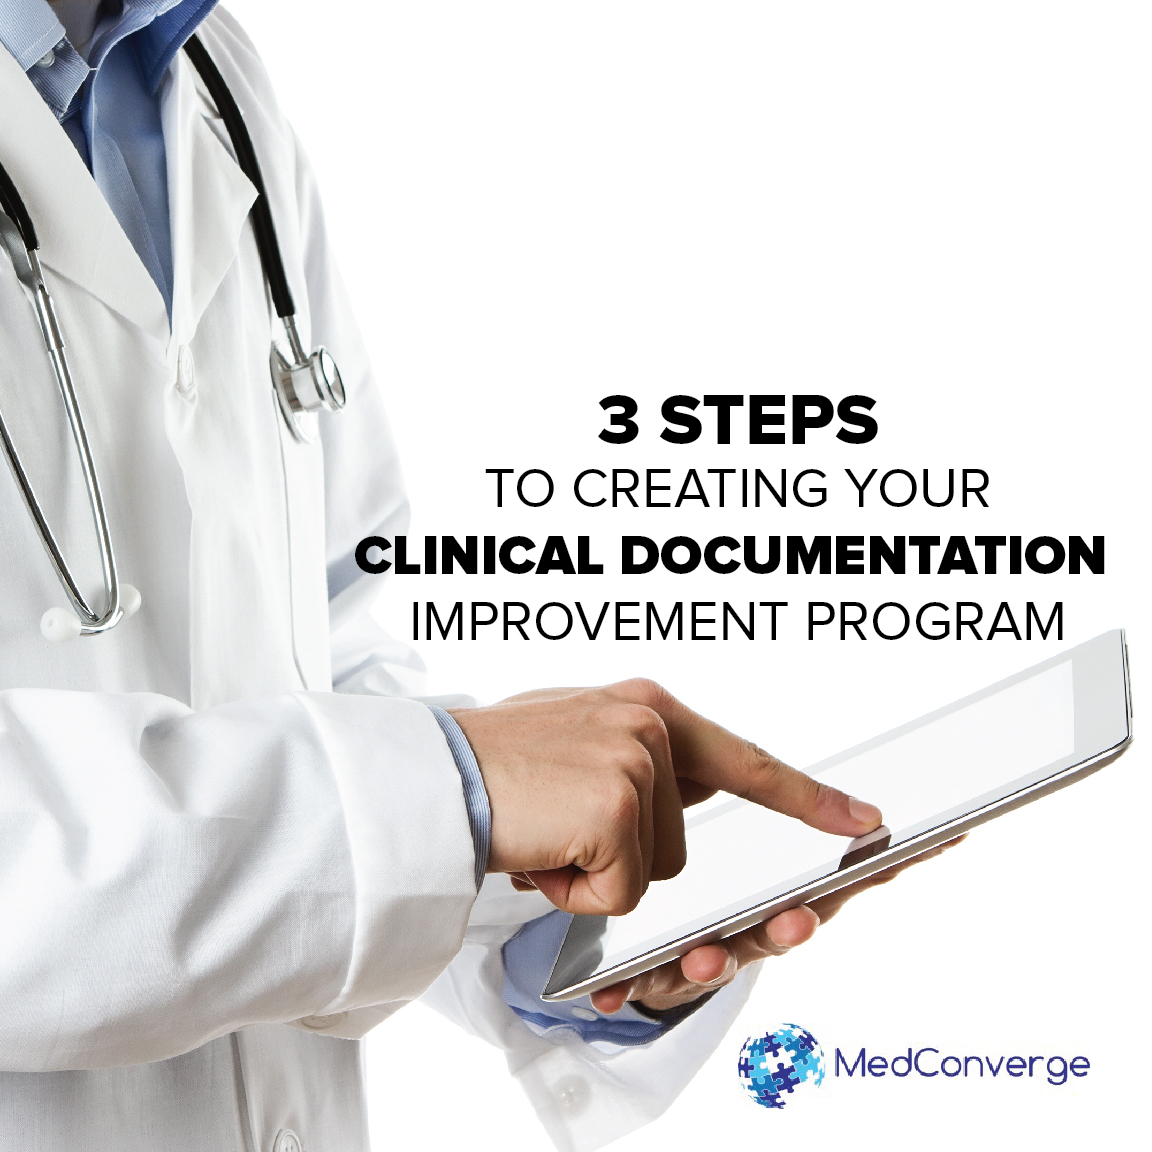 Clinical Documentation Improvement